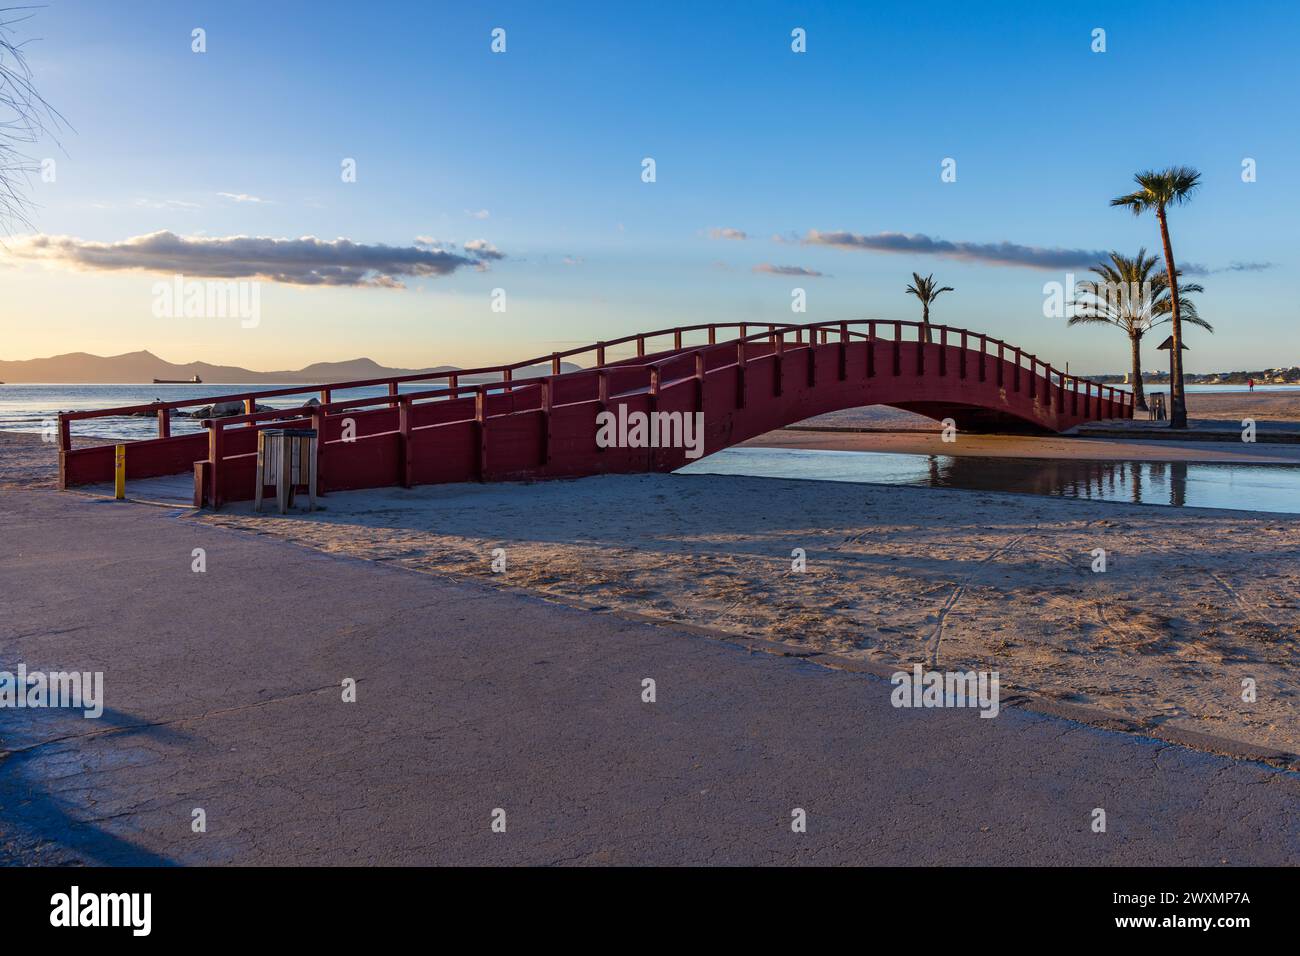 Red footbridge at Alcudia beach, Majorca island, Spain Stock Photo